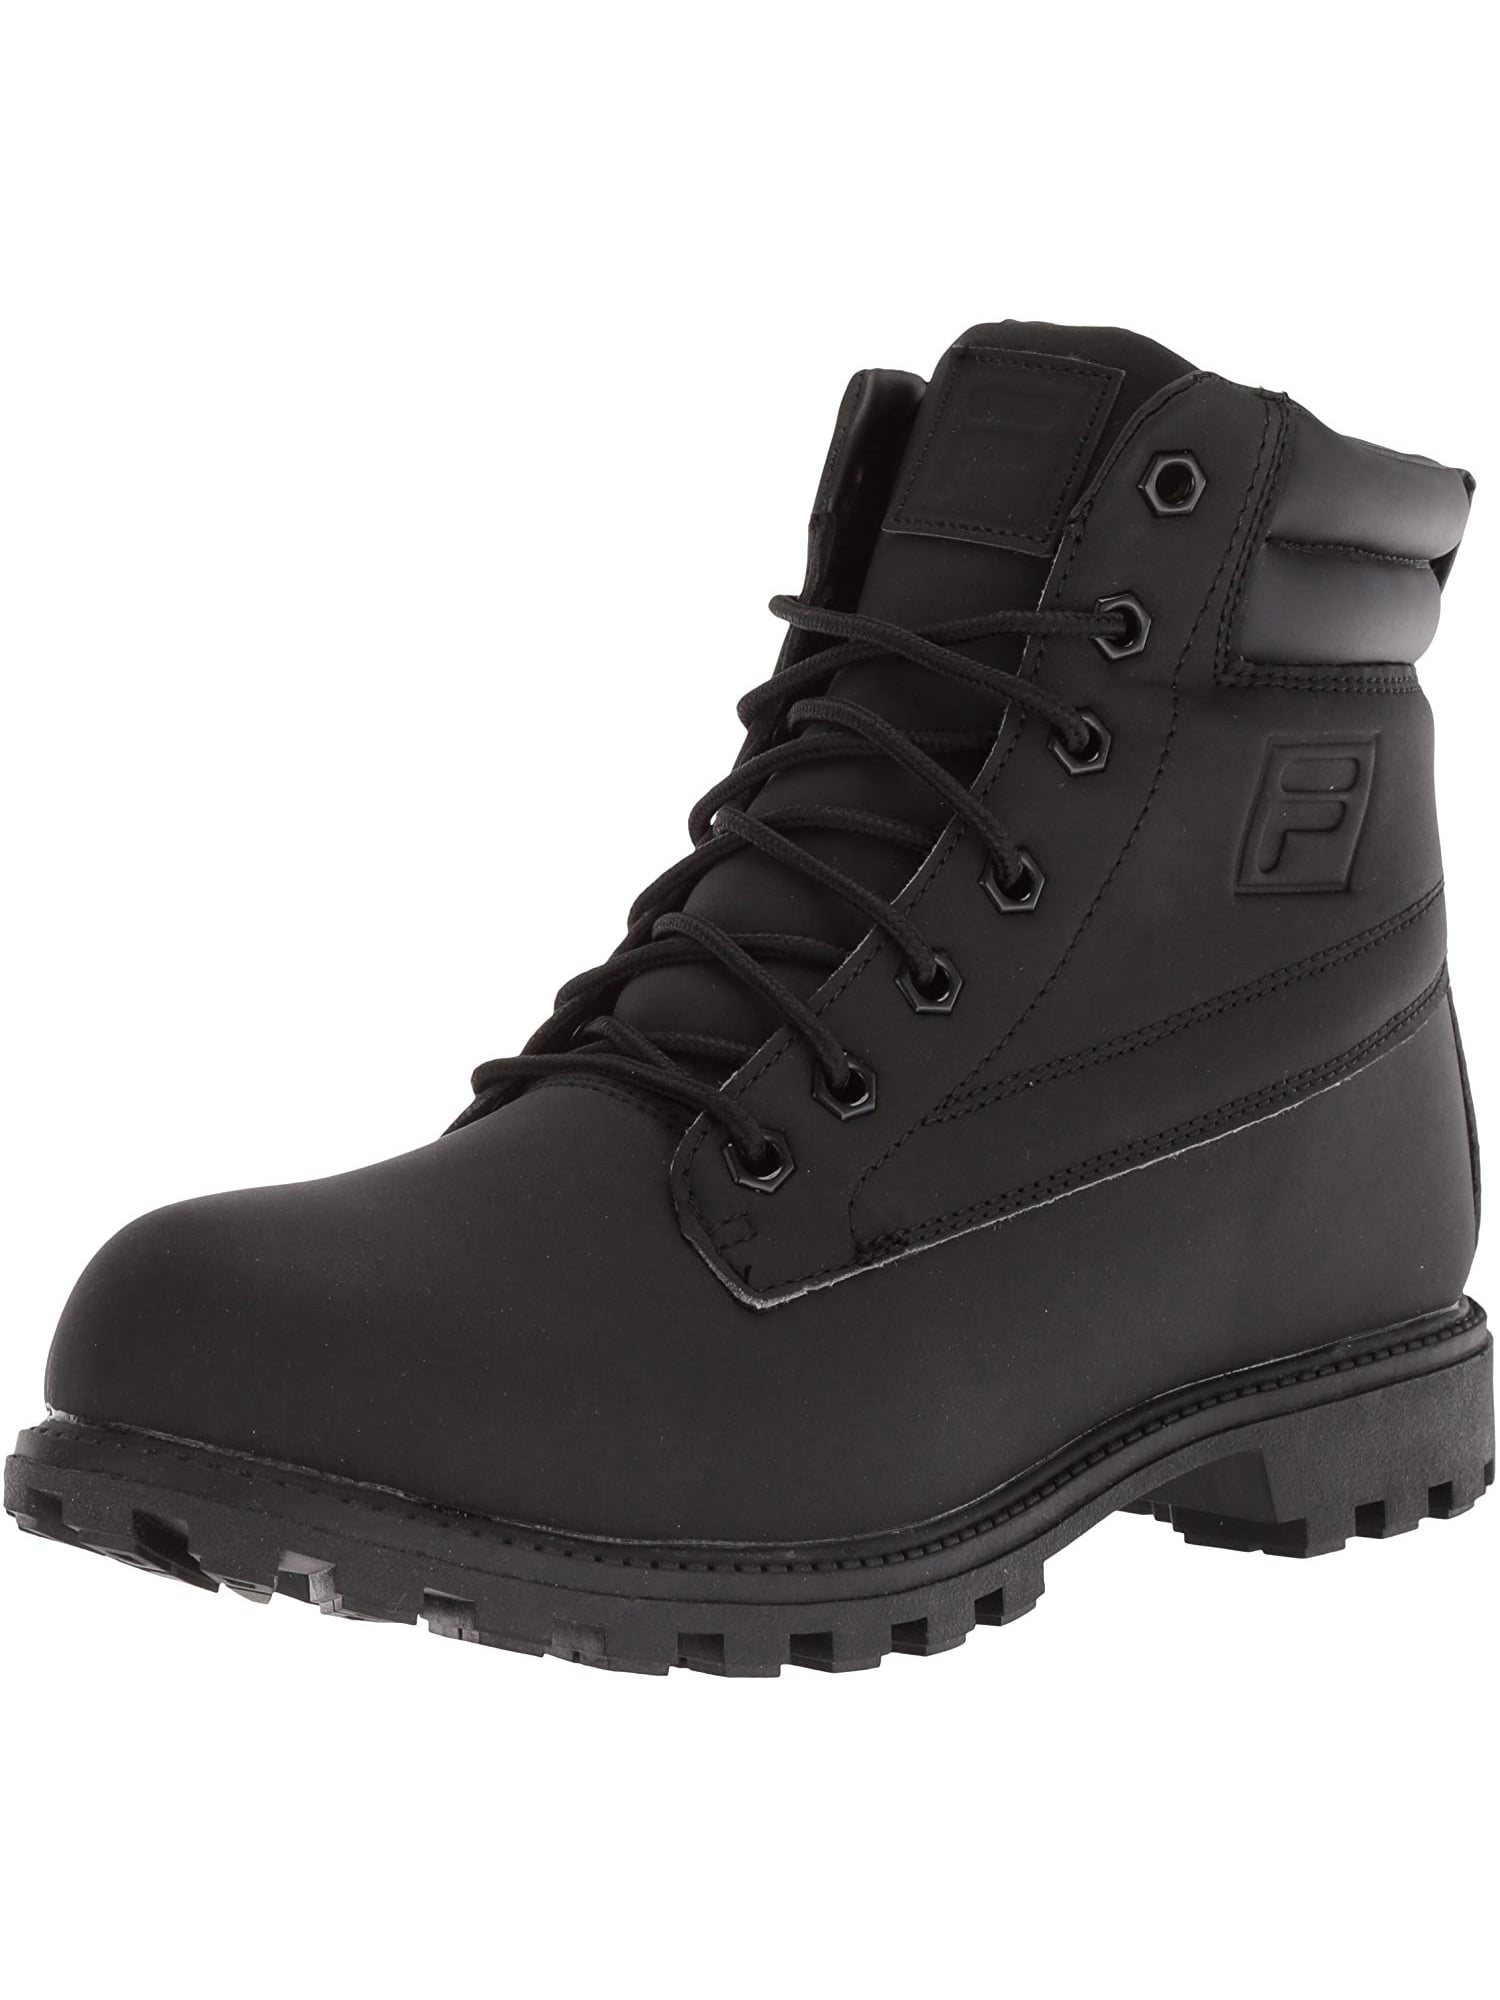 Fila waterproof boots for men blog.knak.jp